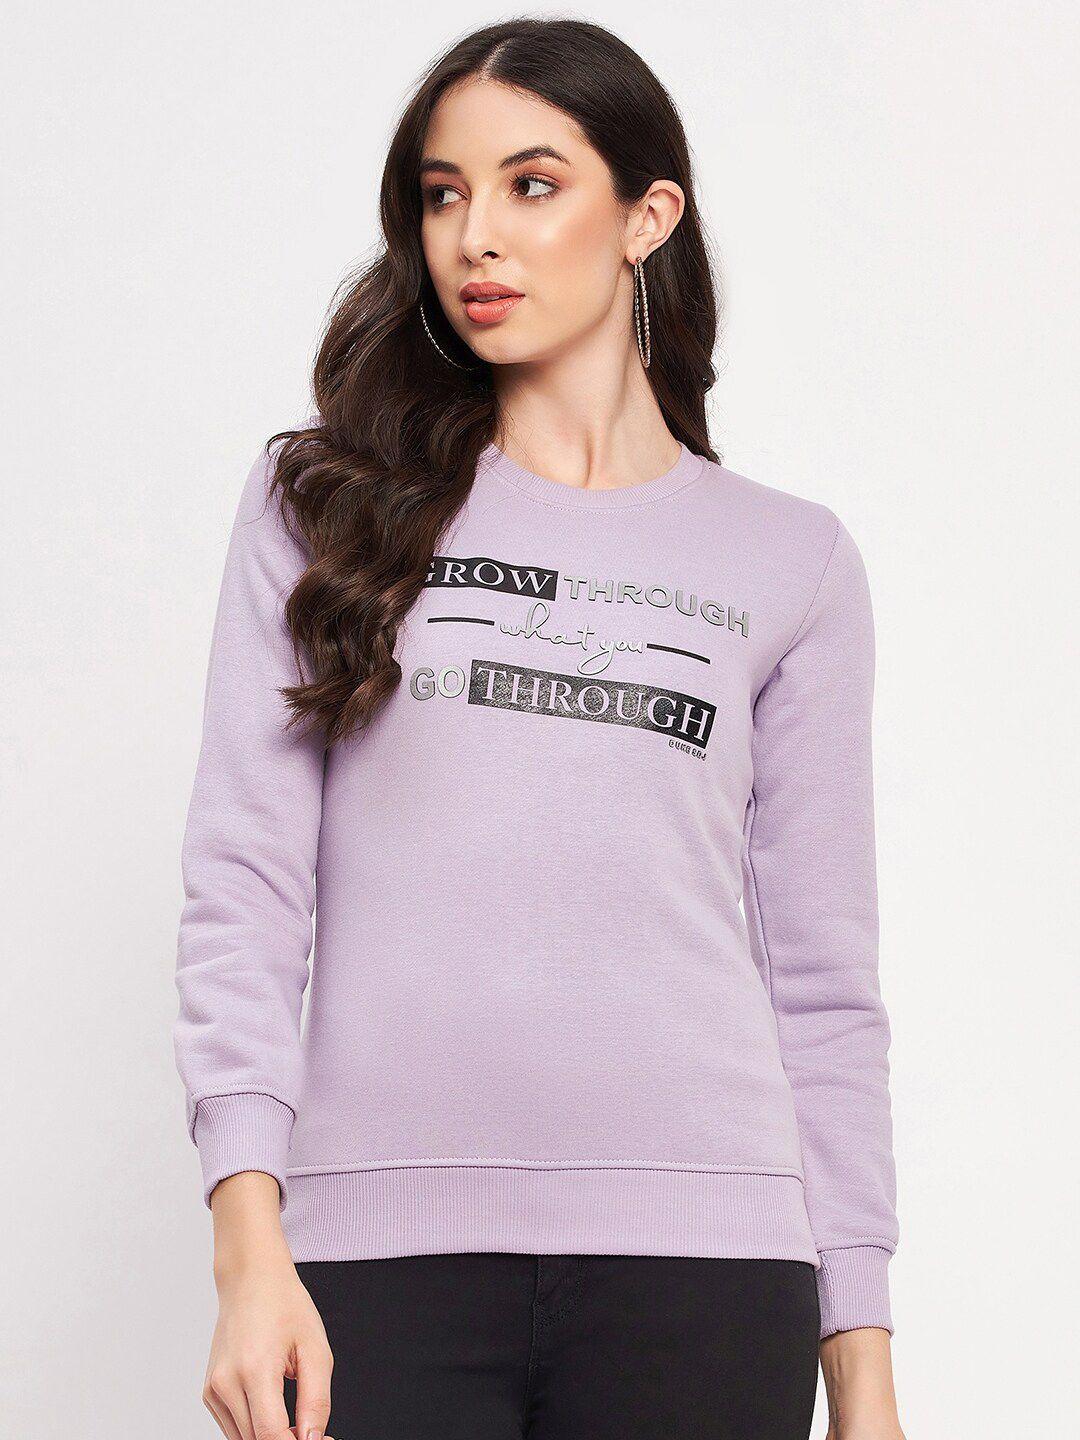 duke-typography-printed-cotton-pullover-sweatshirt